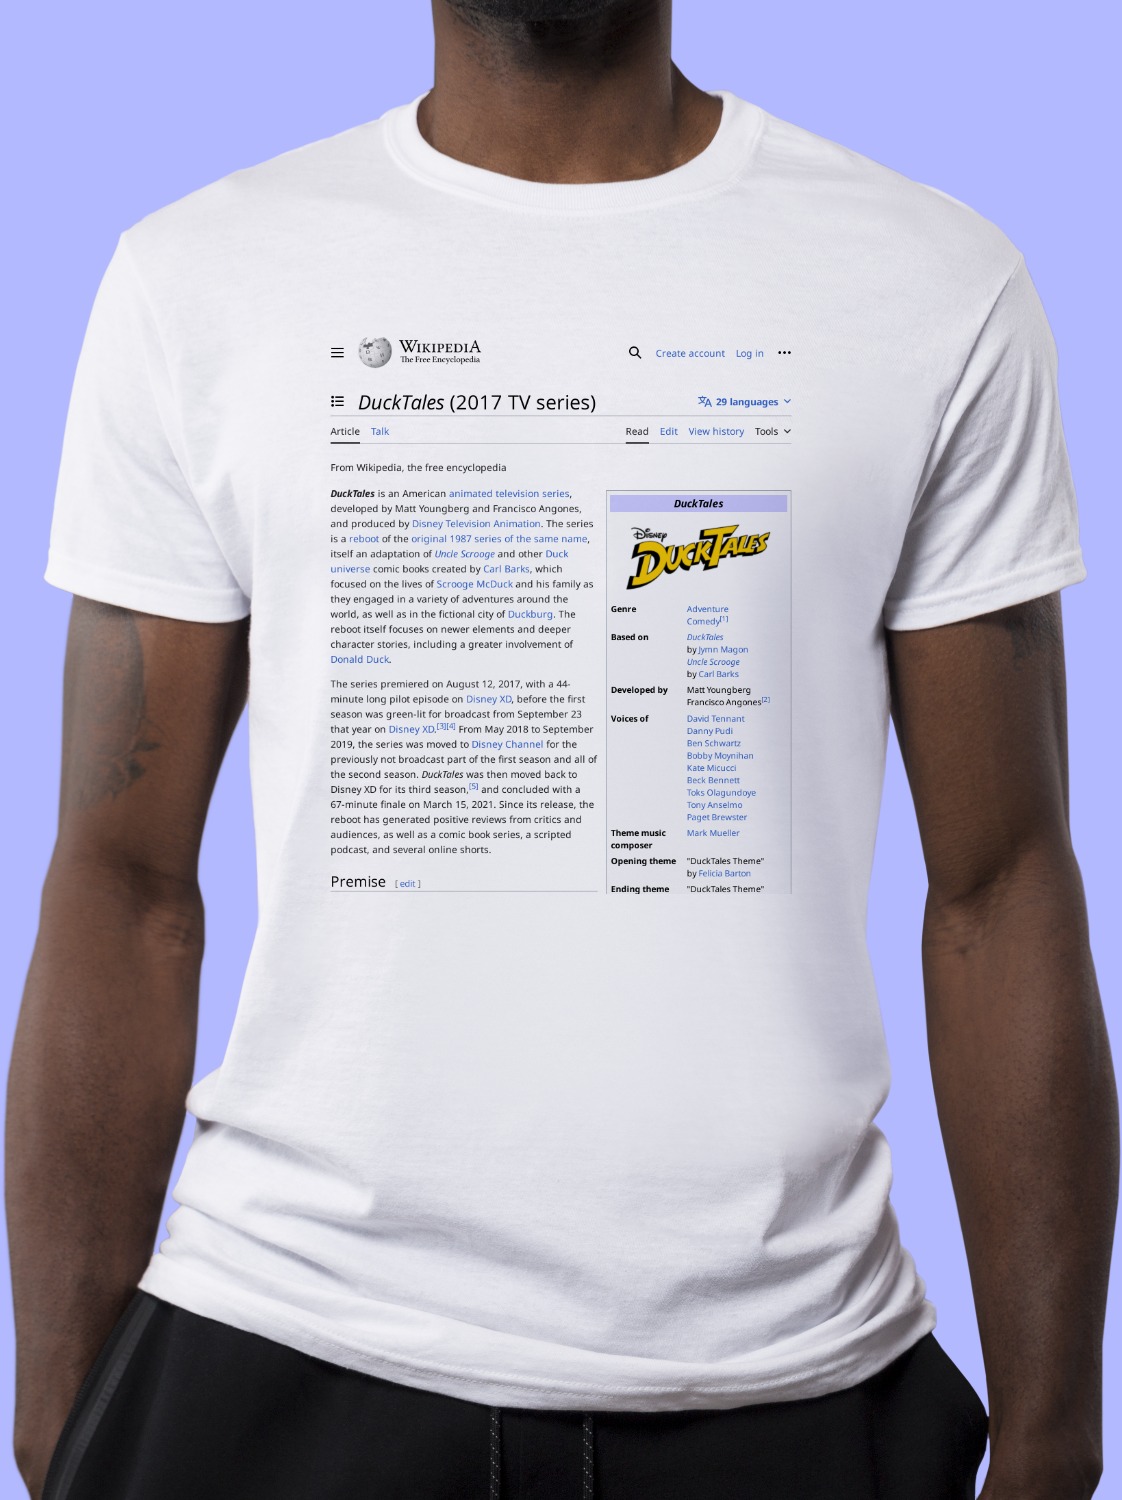 DuckTales_(2017_TV_series) Wikipedia Shirt